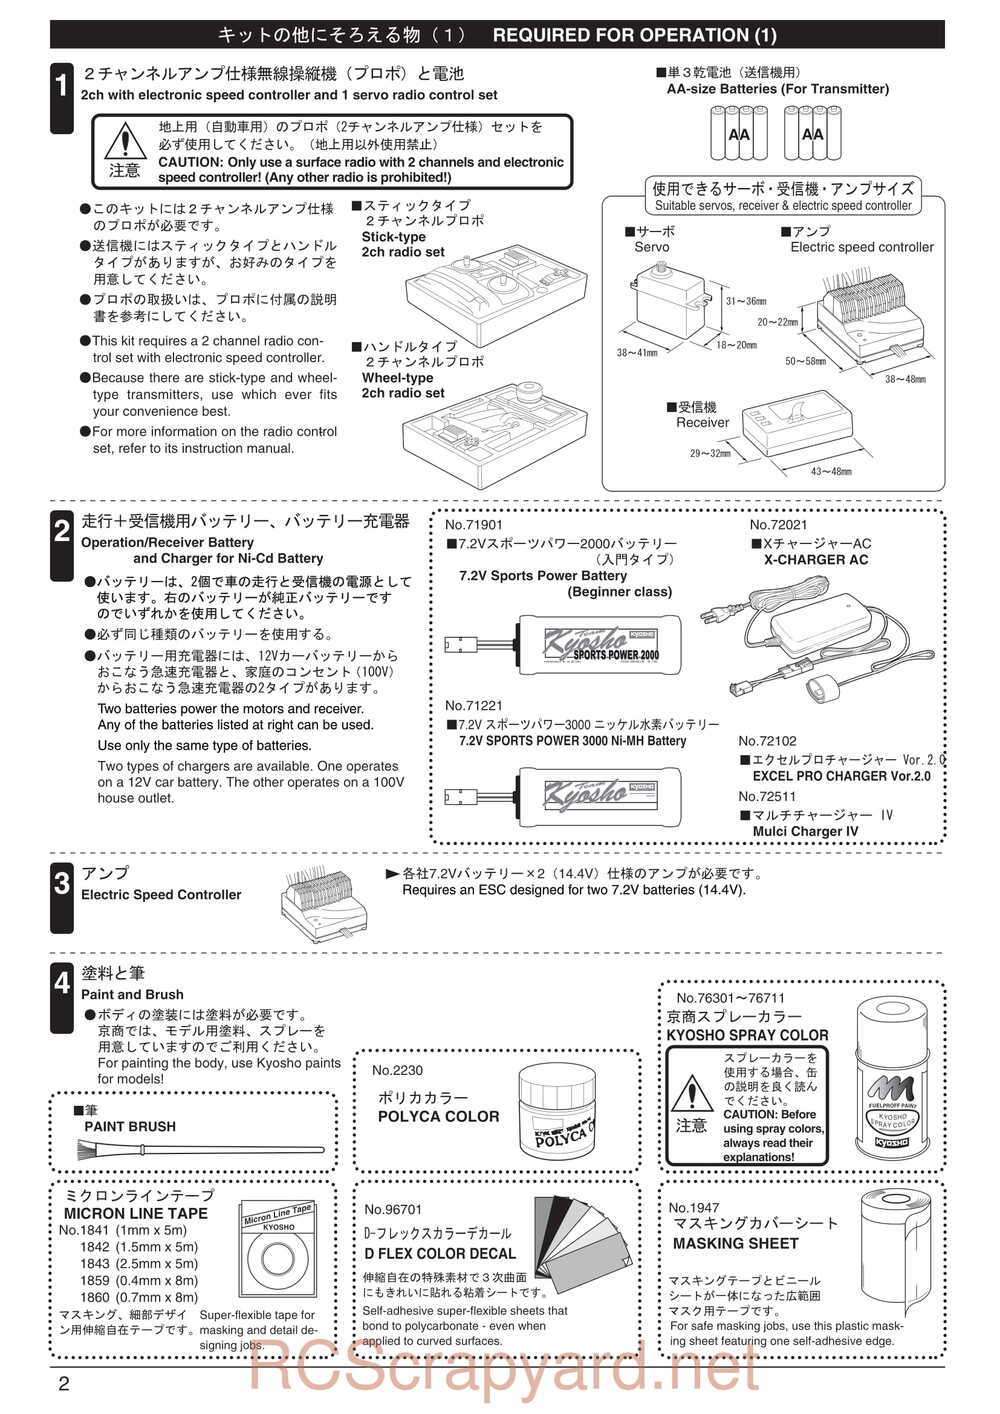 Kyosho - 30521b - Twin-Force - Manual - Page 02